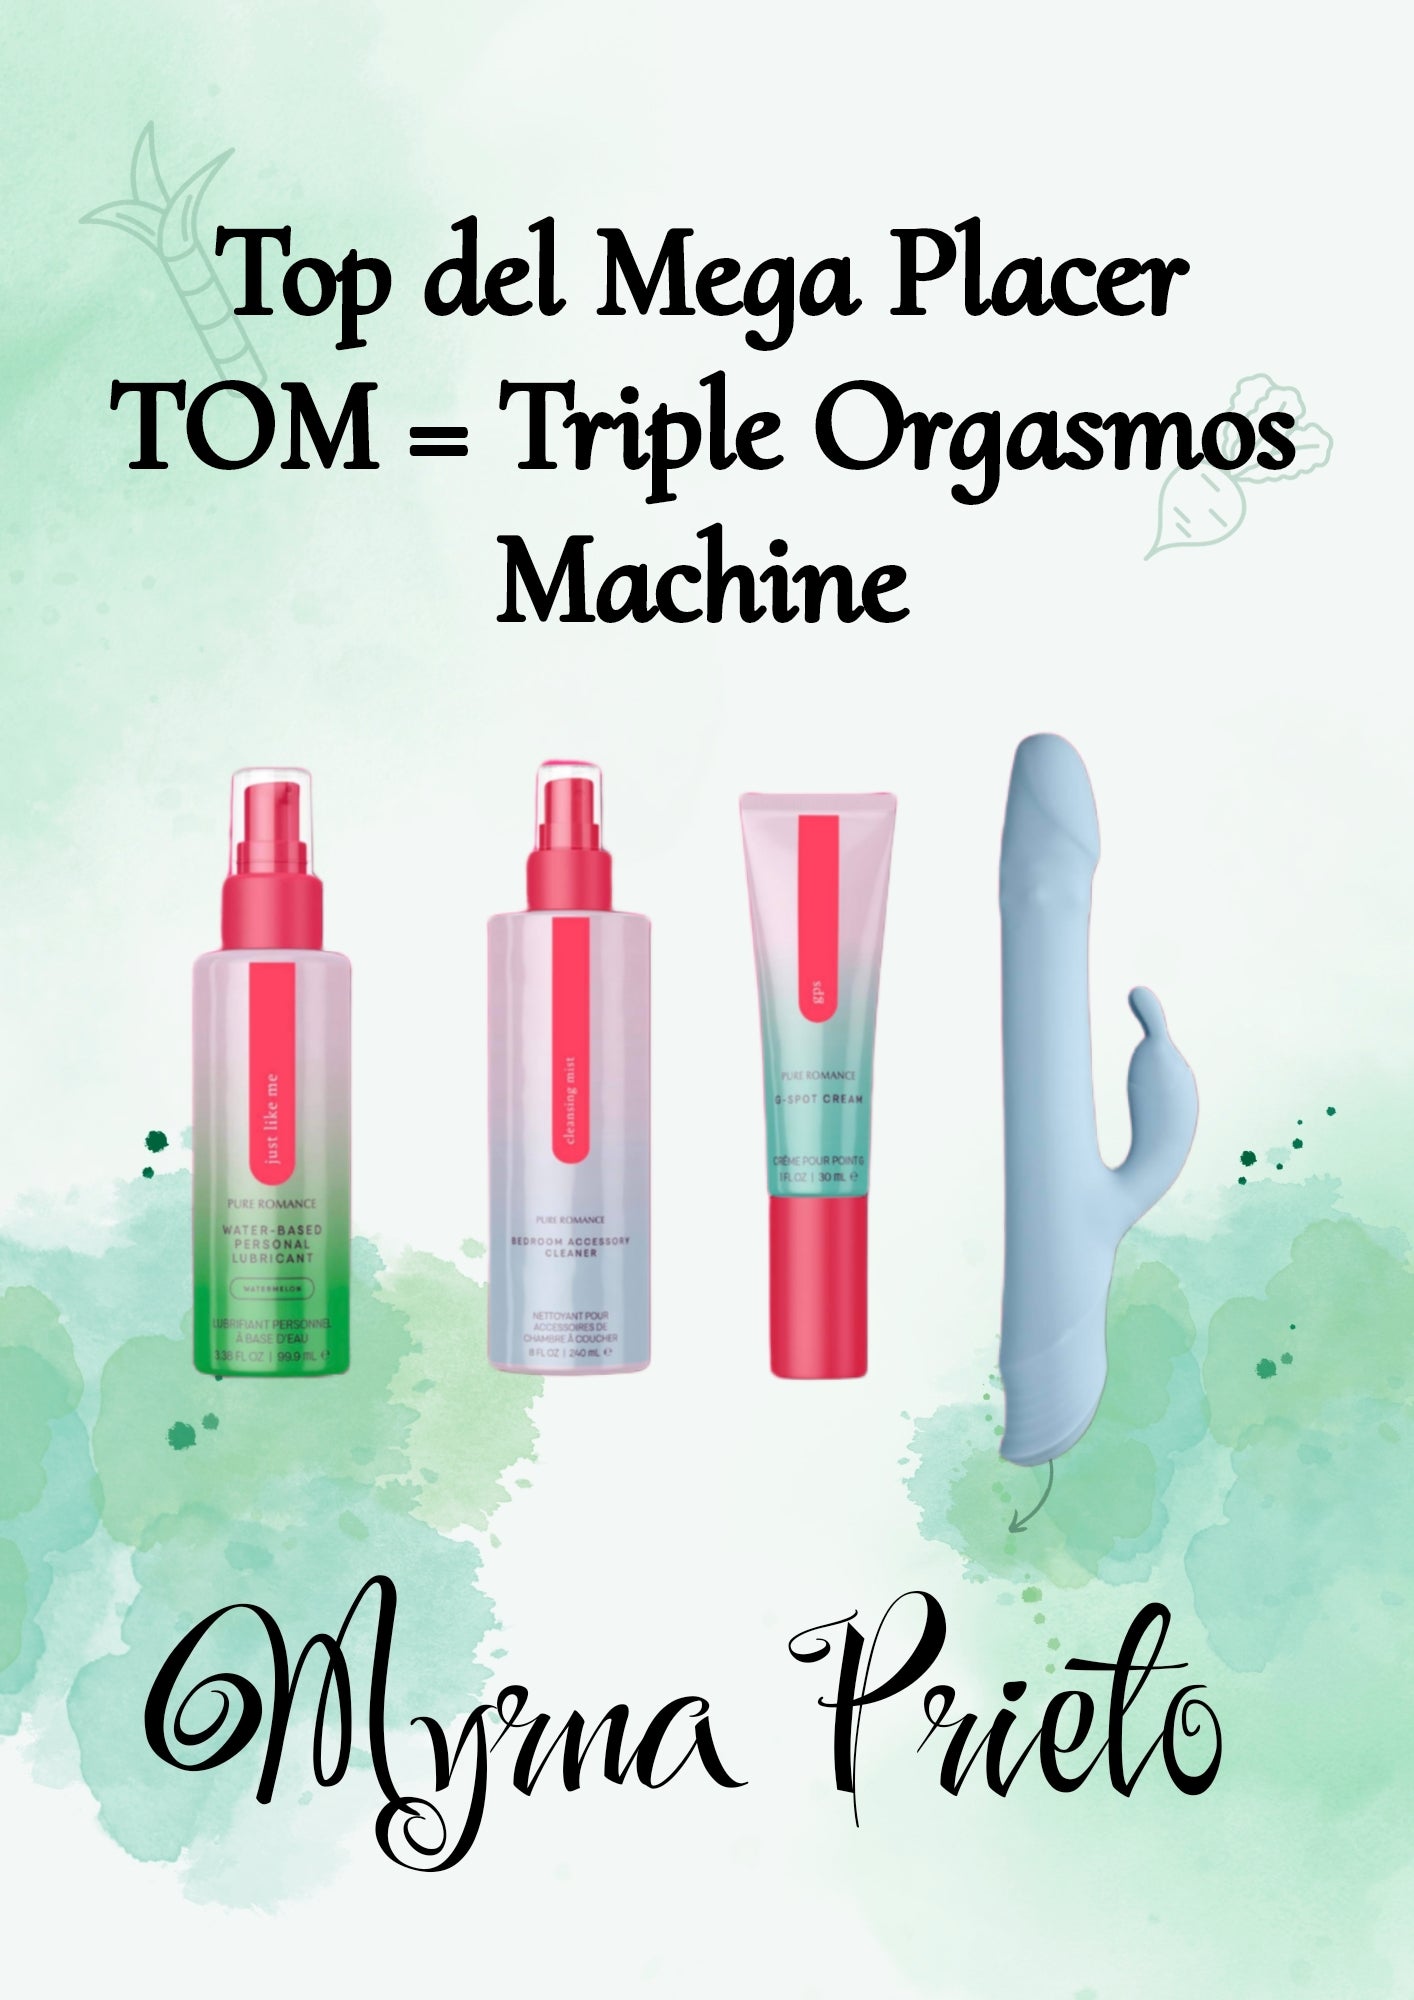 Top del Mega Placer TOM - Triple Orgasmo Machine